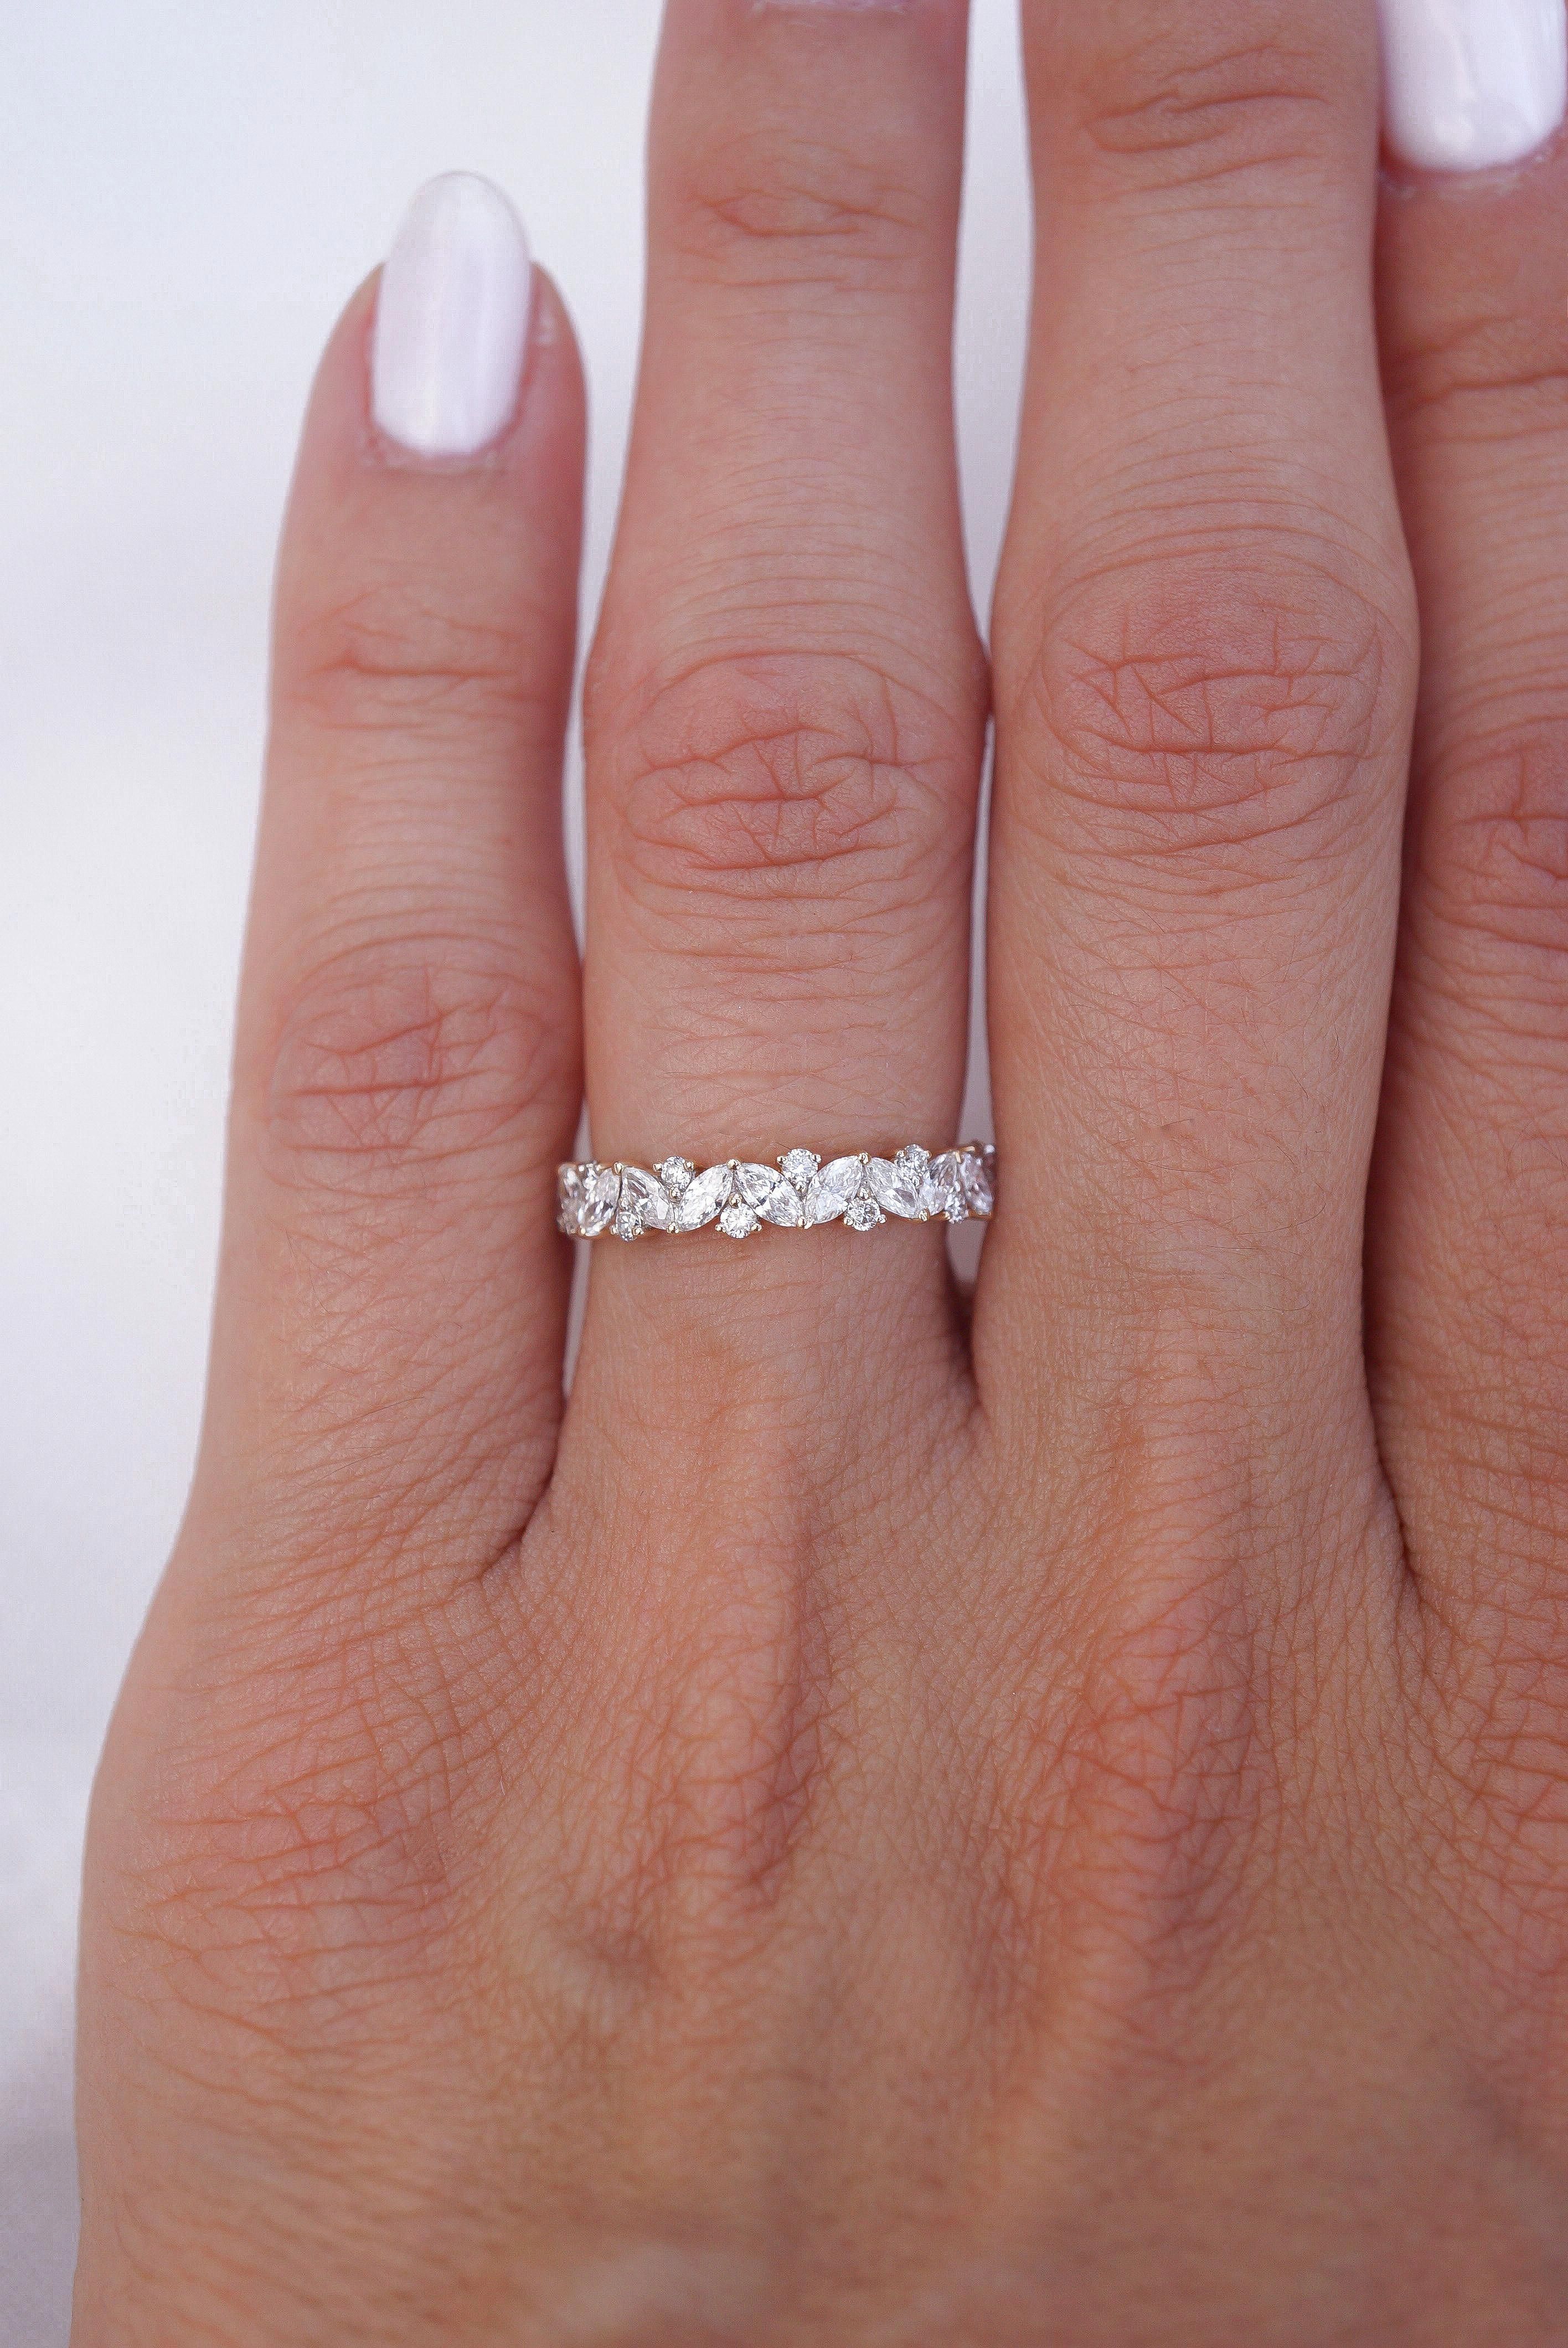 Modern Moissanite Engagement Ring Set 14K White Gold Engagement Rings Leaf Moissanite Ring with Matching Band - Fine Jewelry Ideas -   17 wedding Bands round ideas